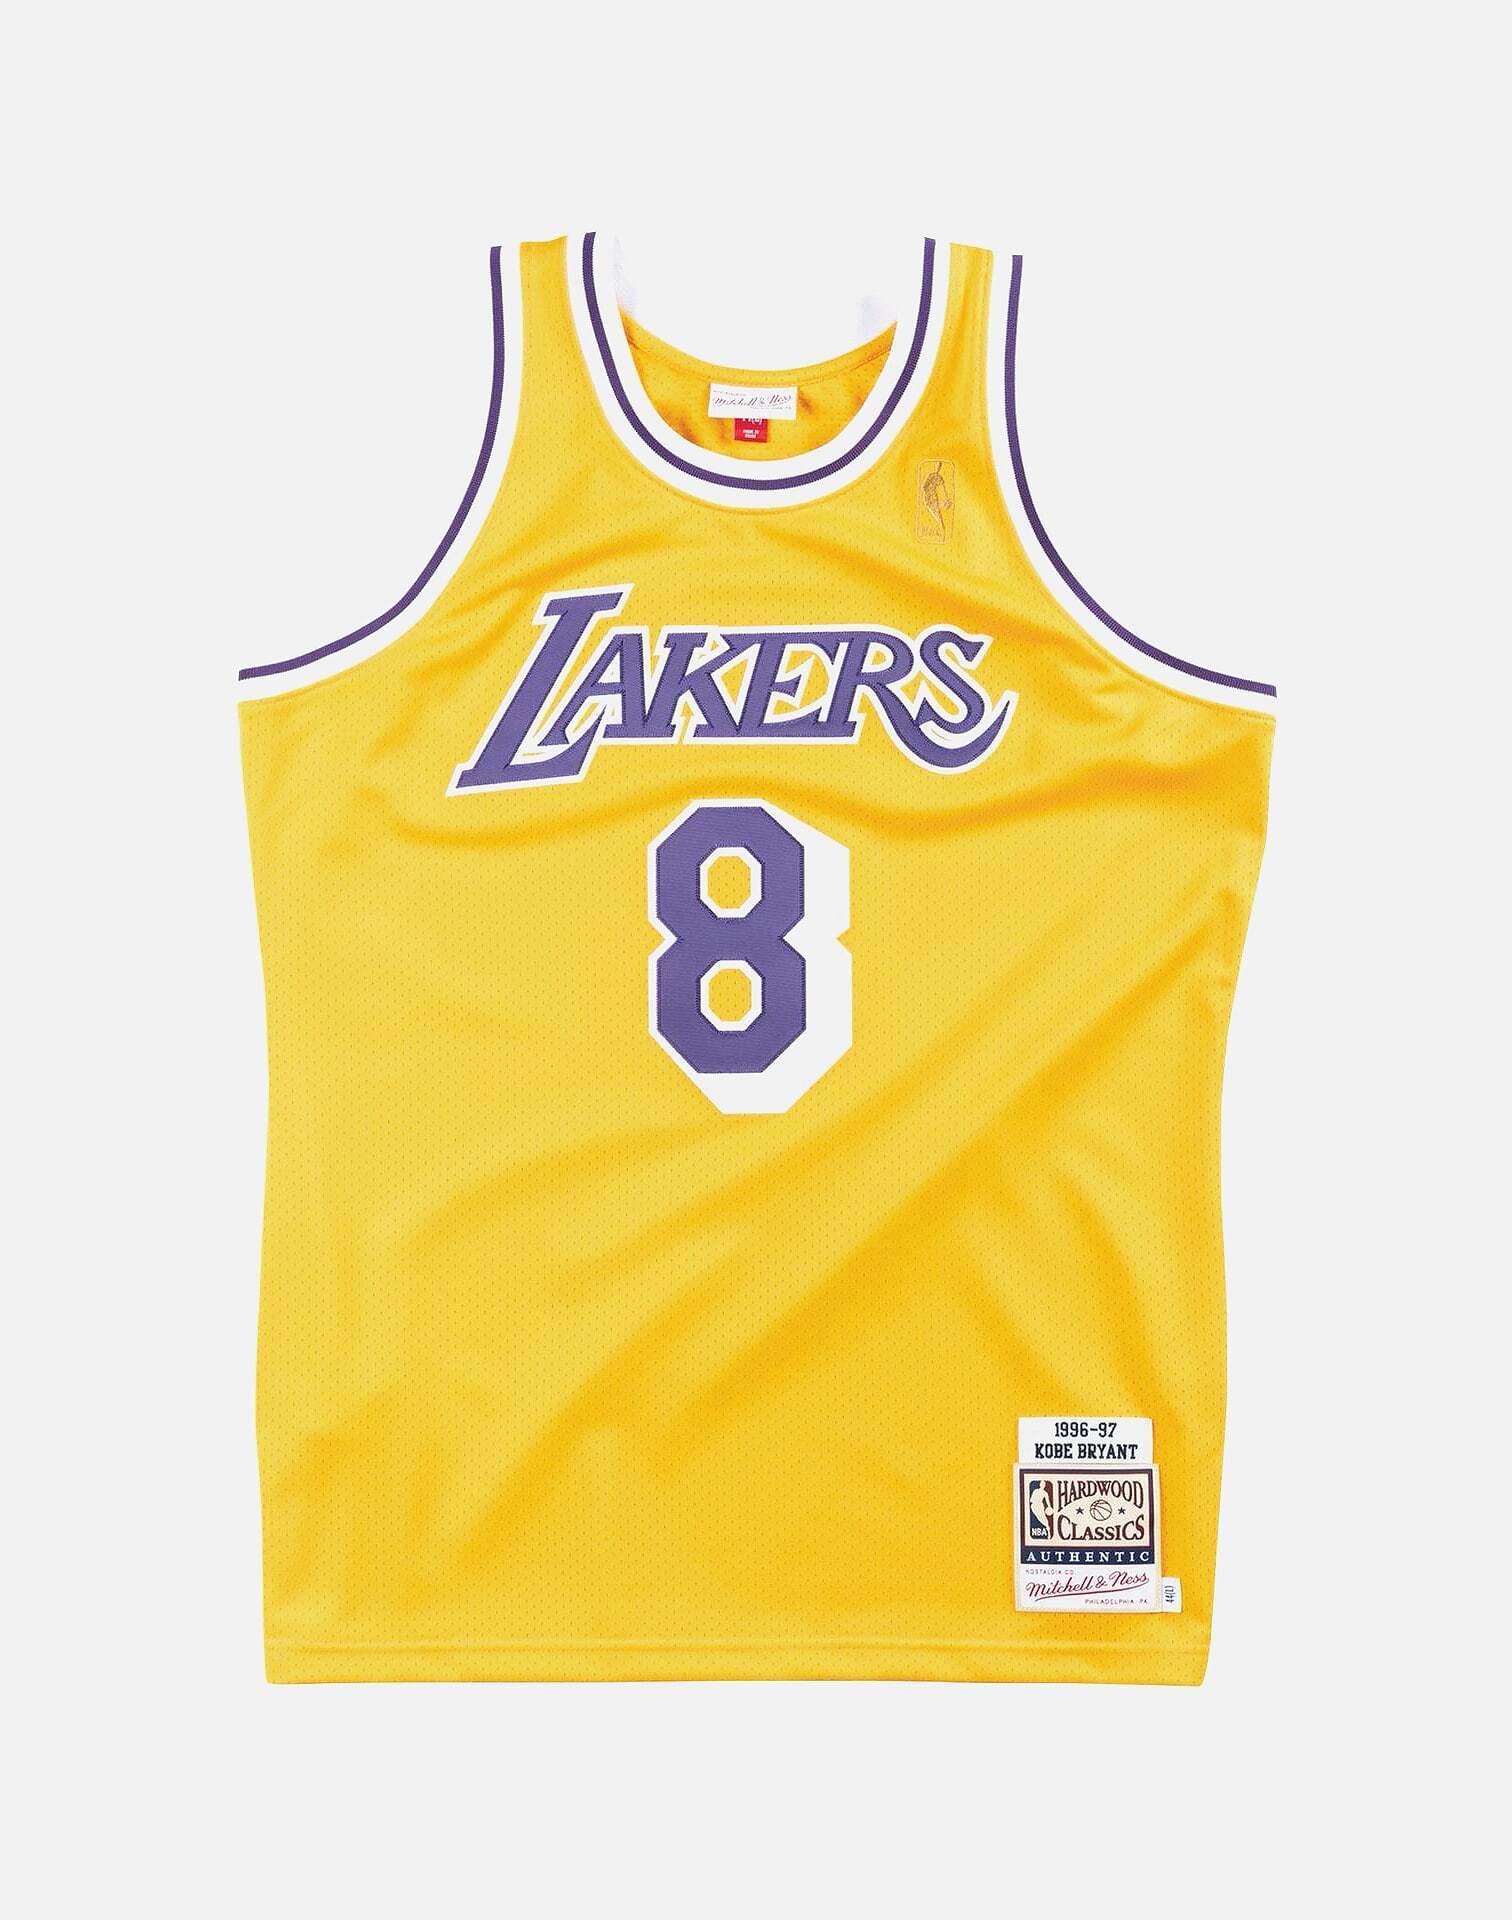 Boys Kobe Bryant Jersey - Lakers - Boys 14-16, 18-20 - Front #8 - Back #24  - Yellow